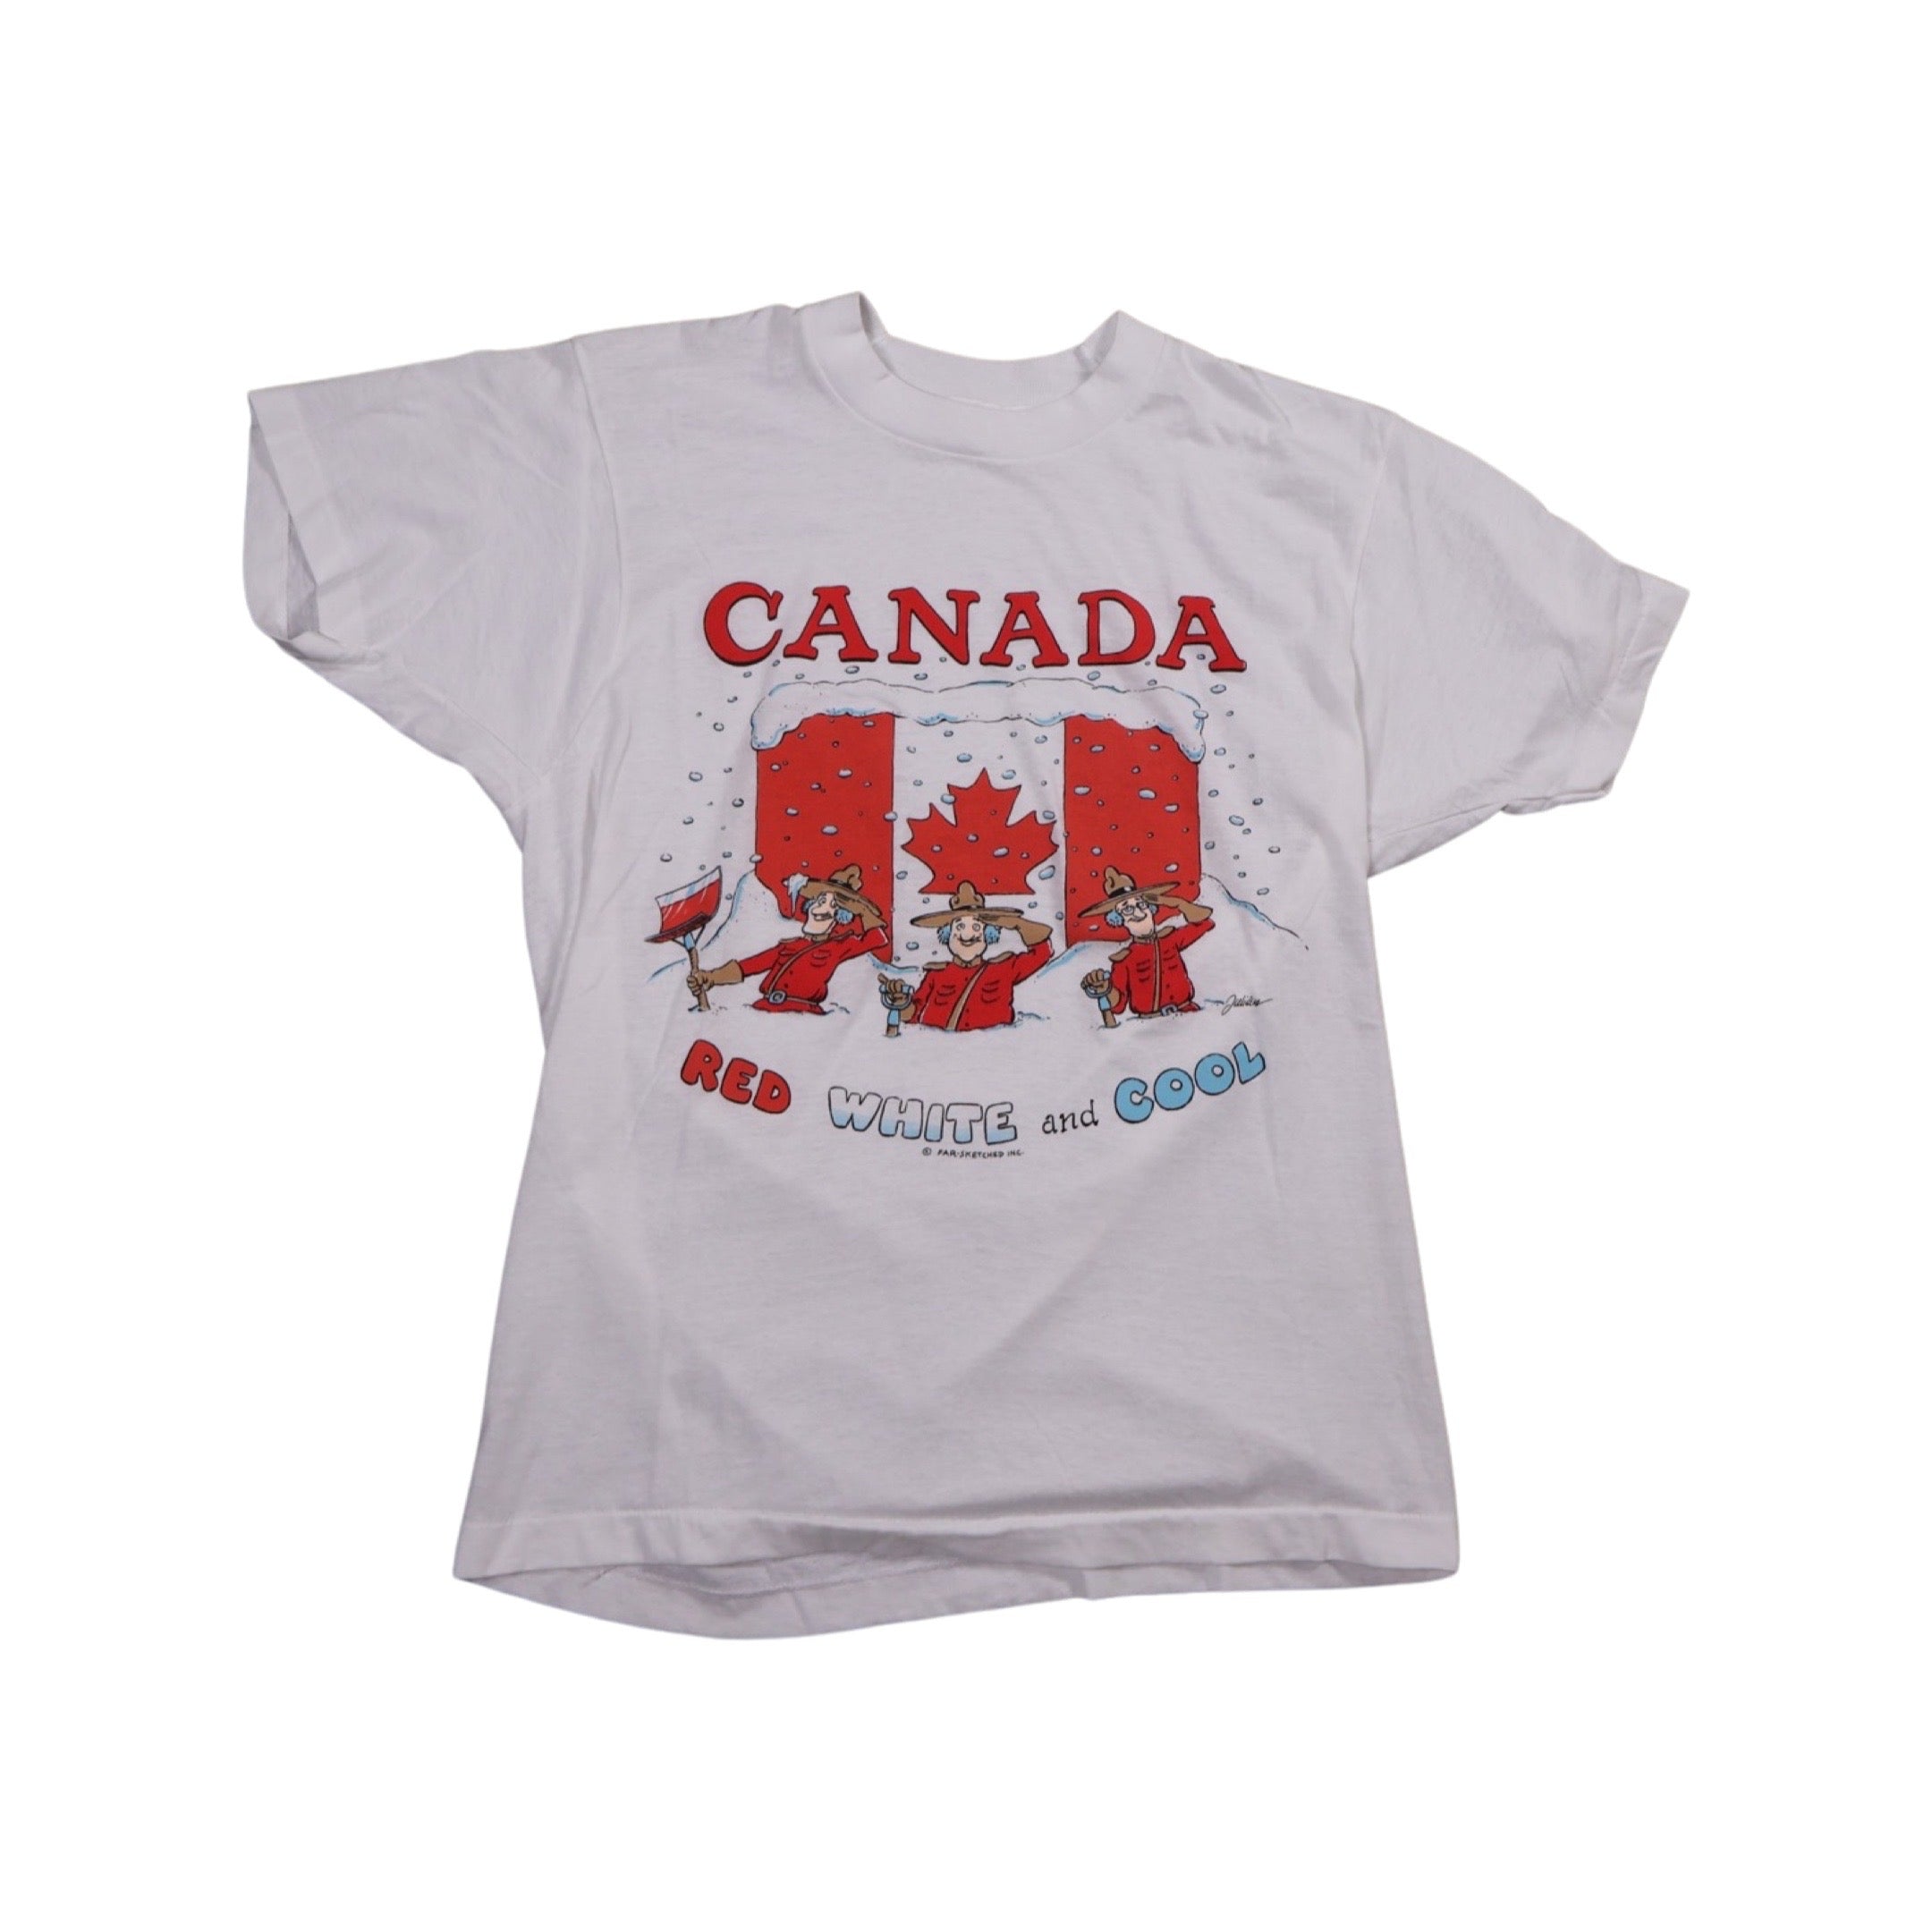 Canada 80s T-Shirt (Medium)